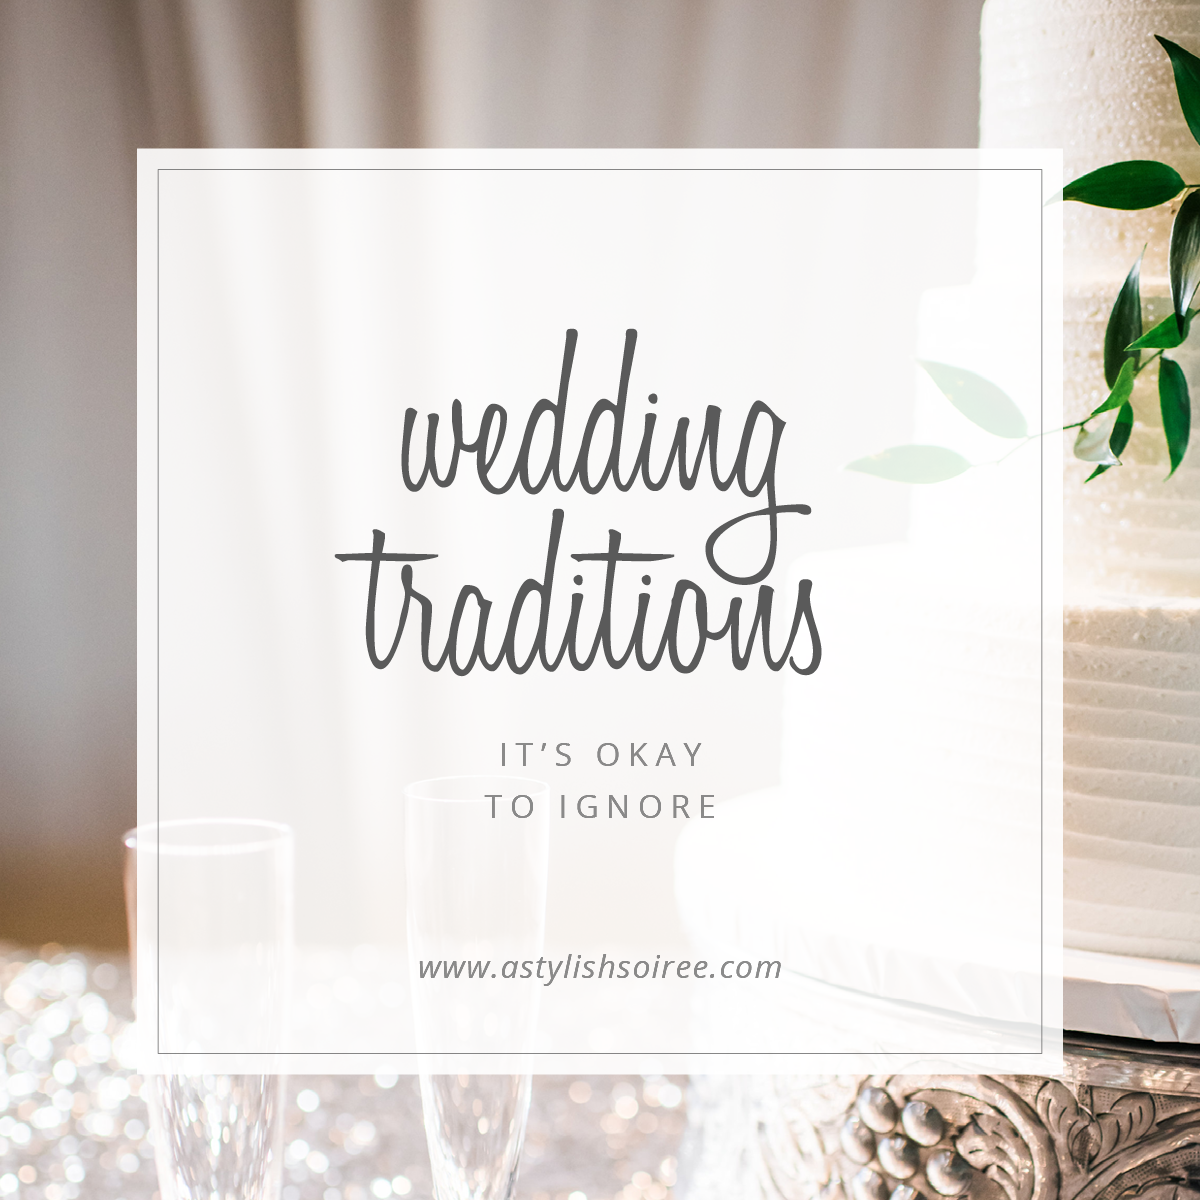 Dallas Wedding Planner | Wedding Traditions It's Okay to Ignore